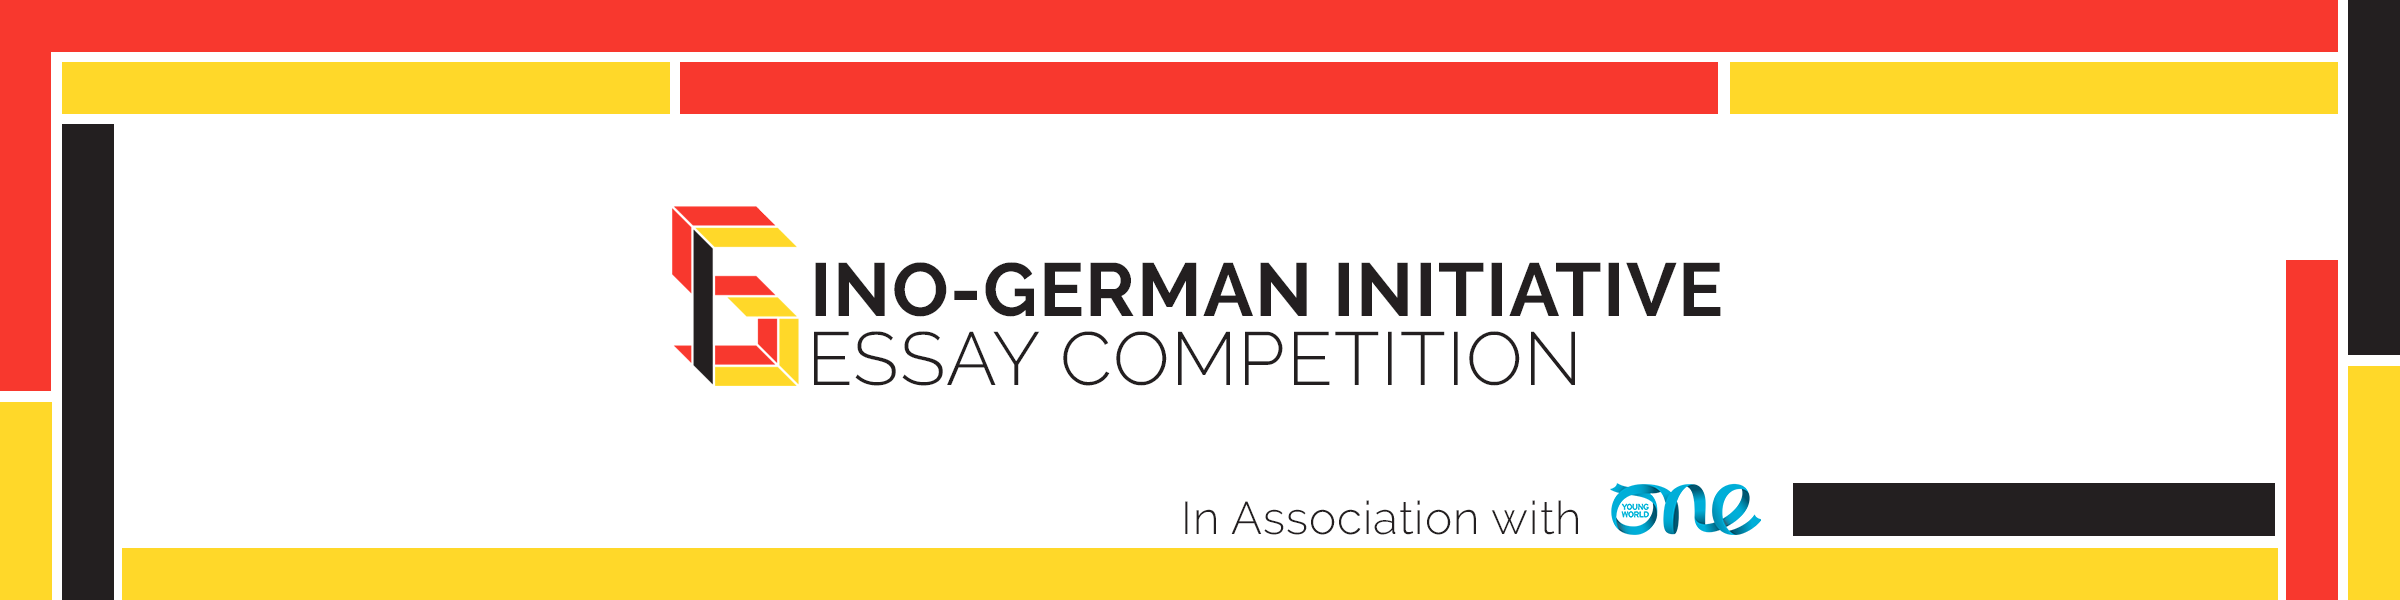 SGI Essay Competition Banner